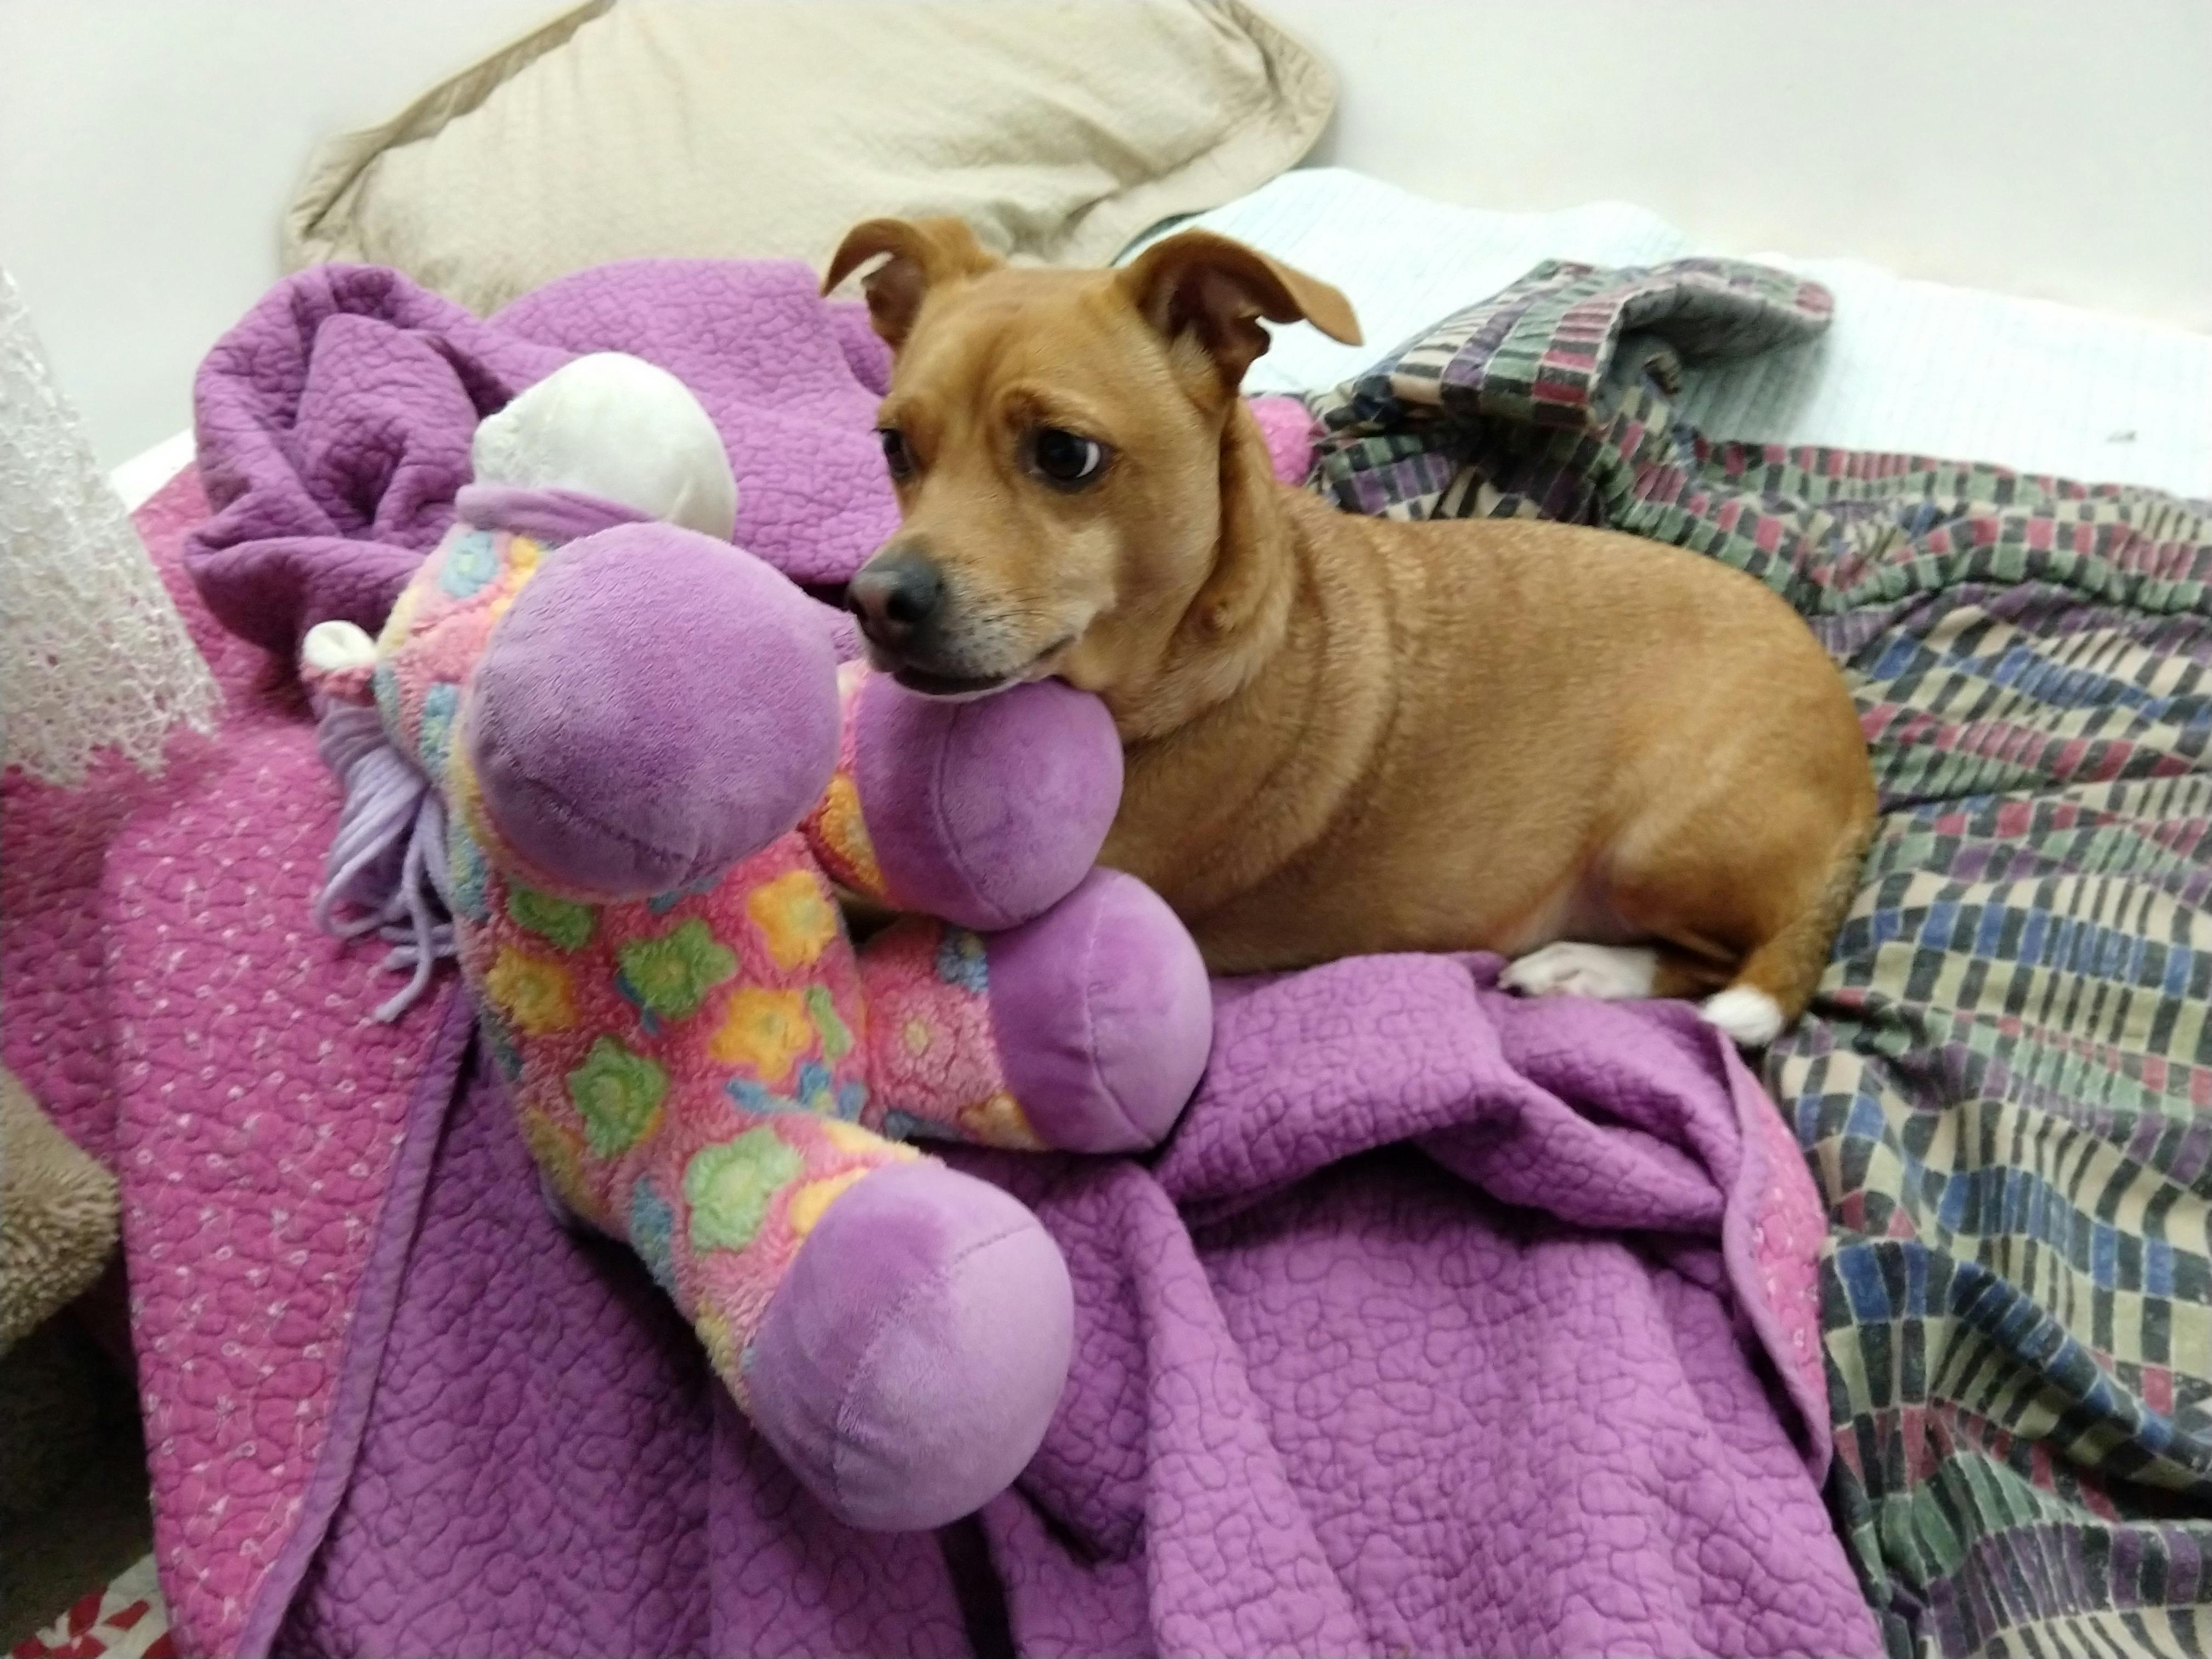 Free stock photo of Cojack, dog, purple toy